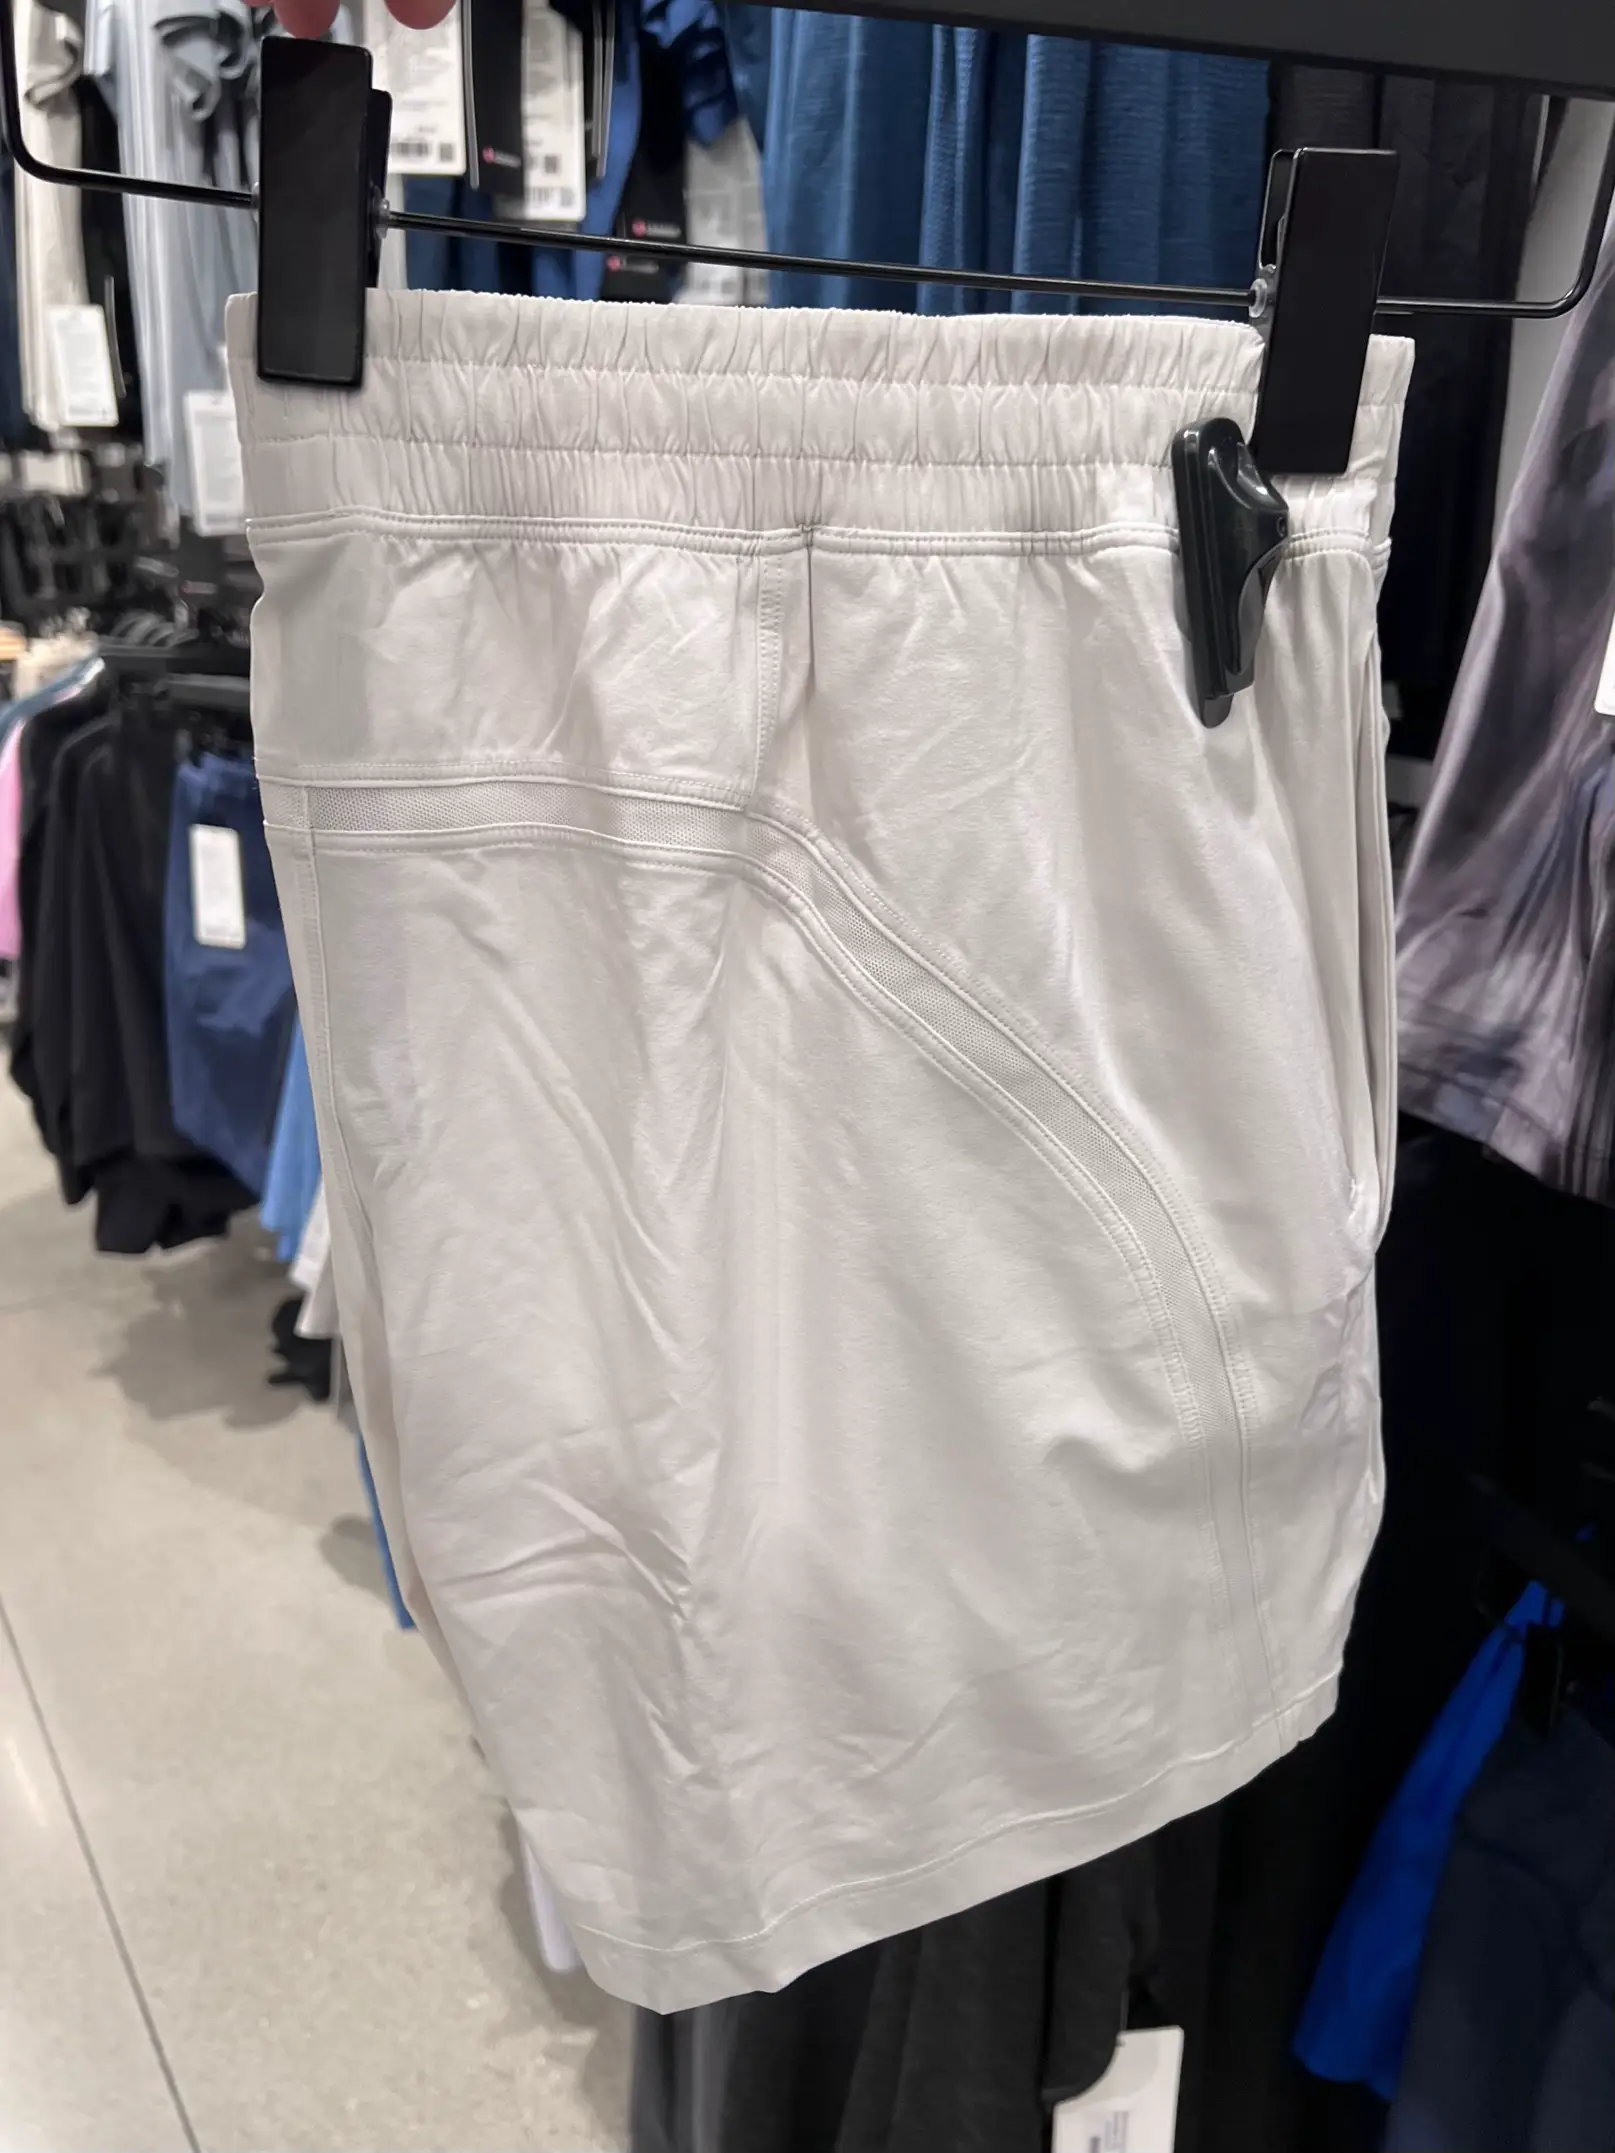 Lululemon softstream shorts never worn very - Depop